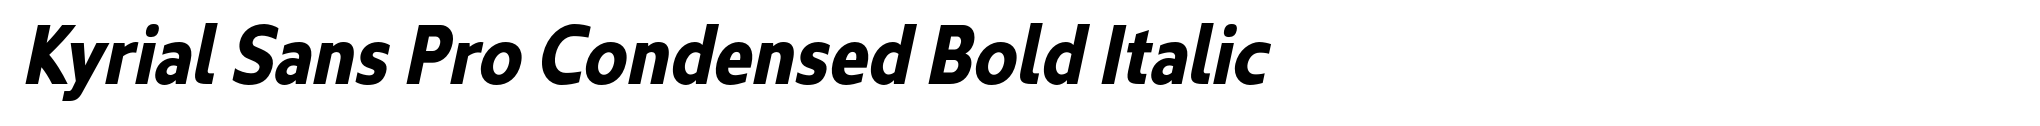 Kyrial Sans Pro Condensed Bold Italic image